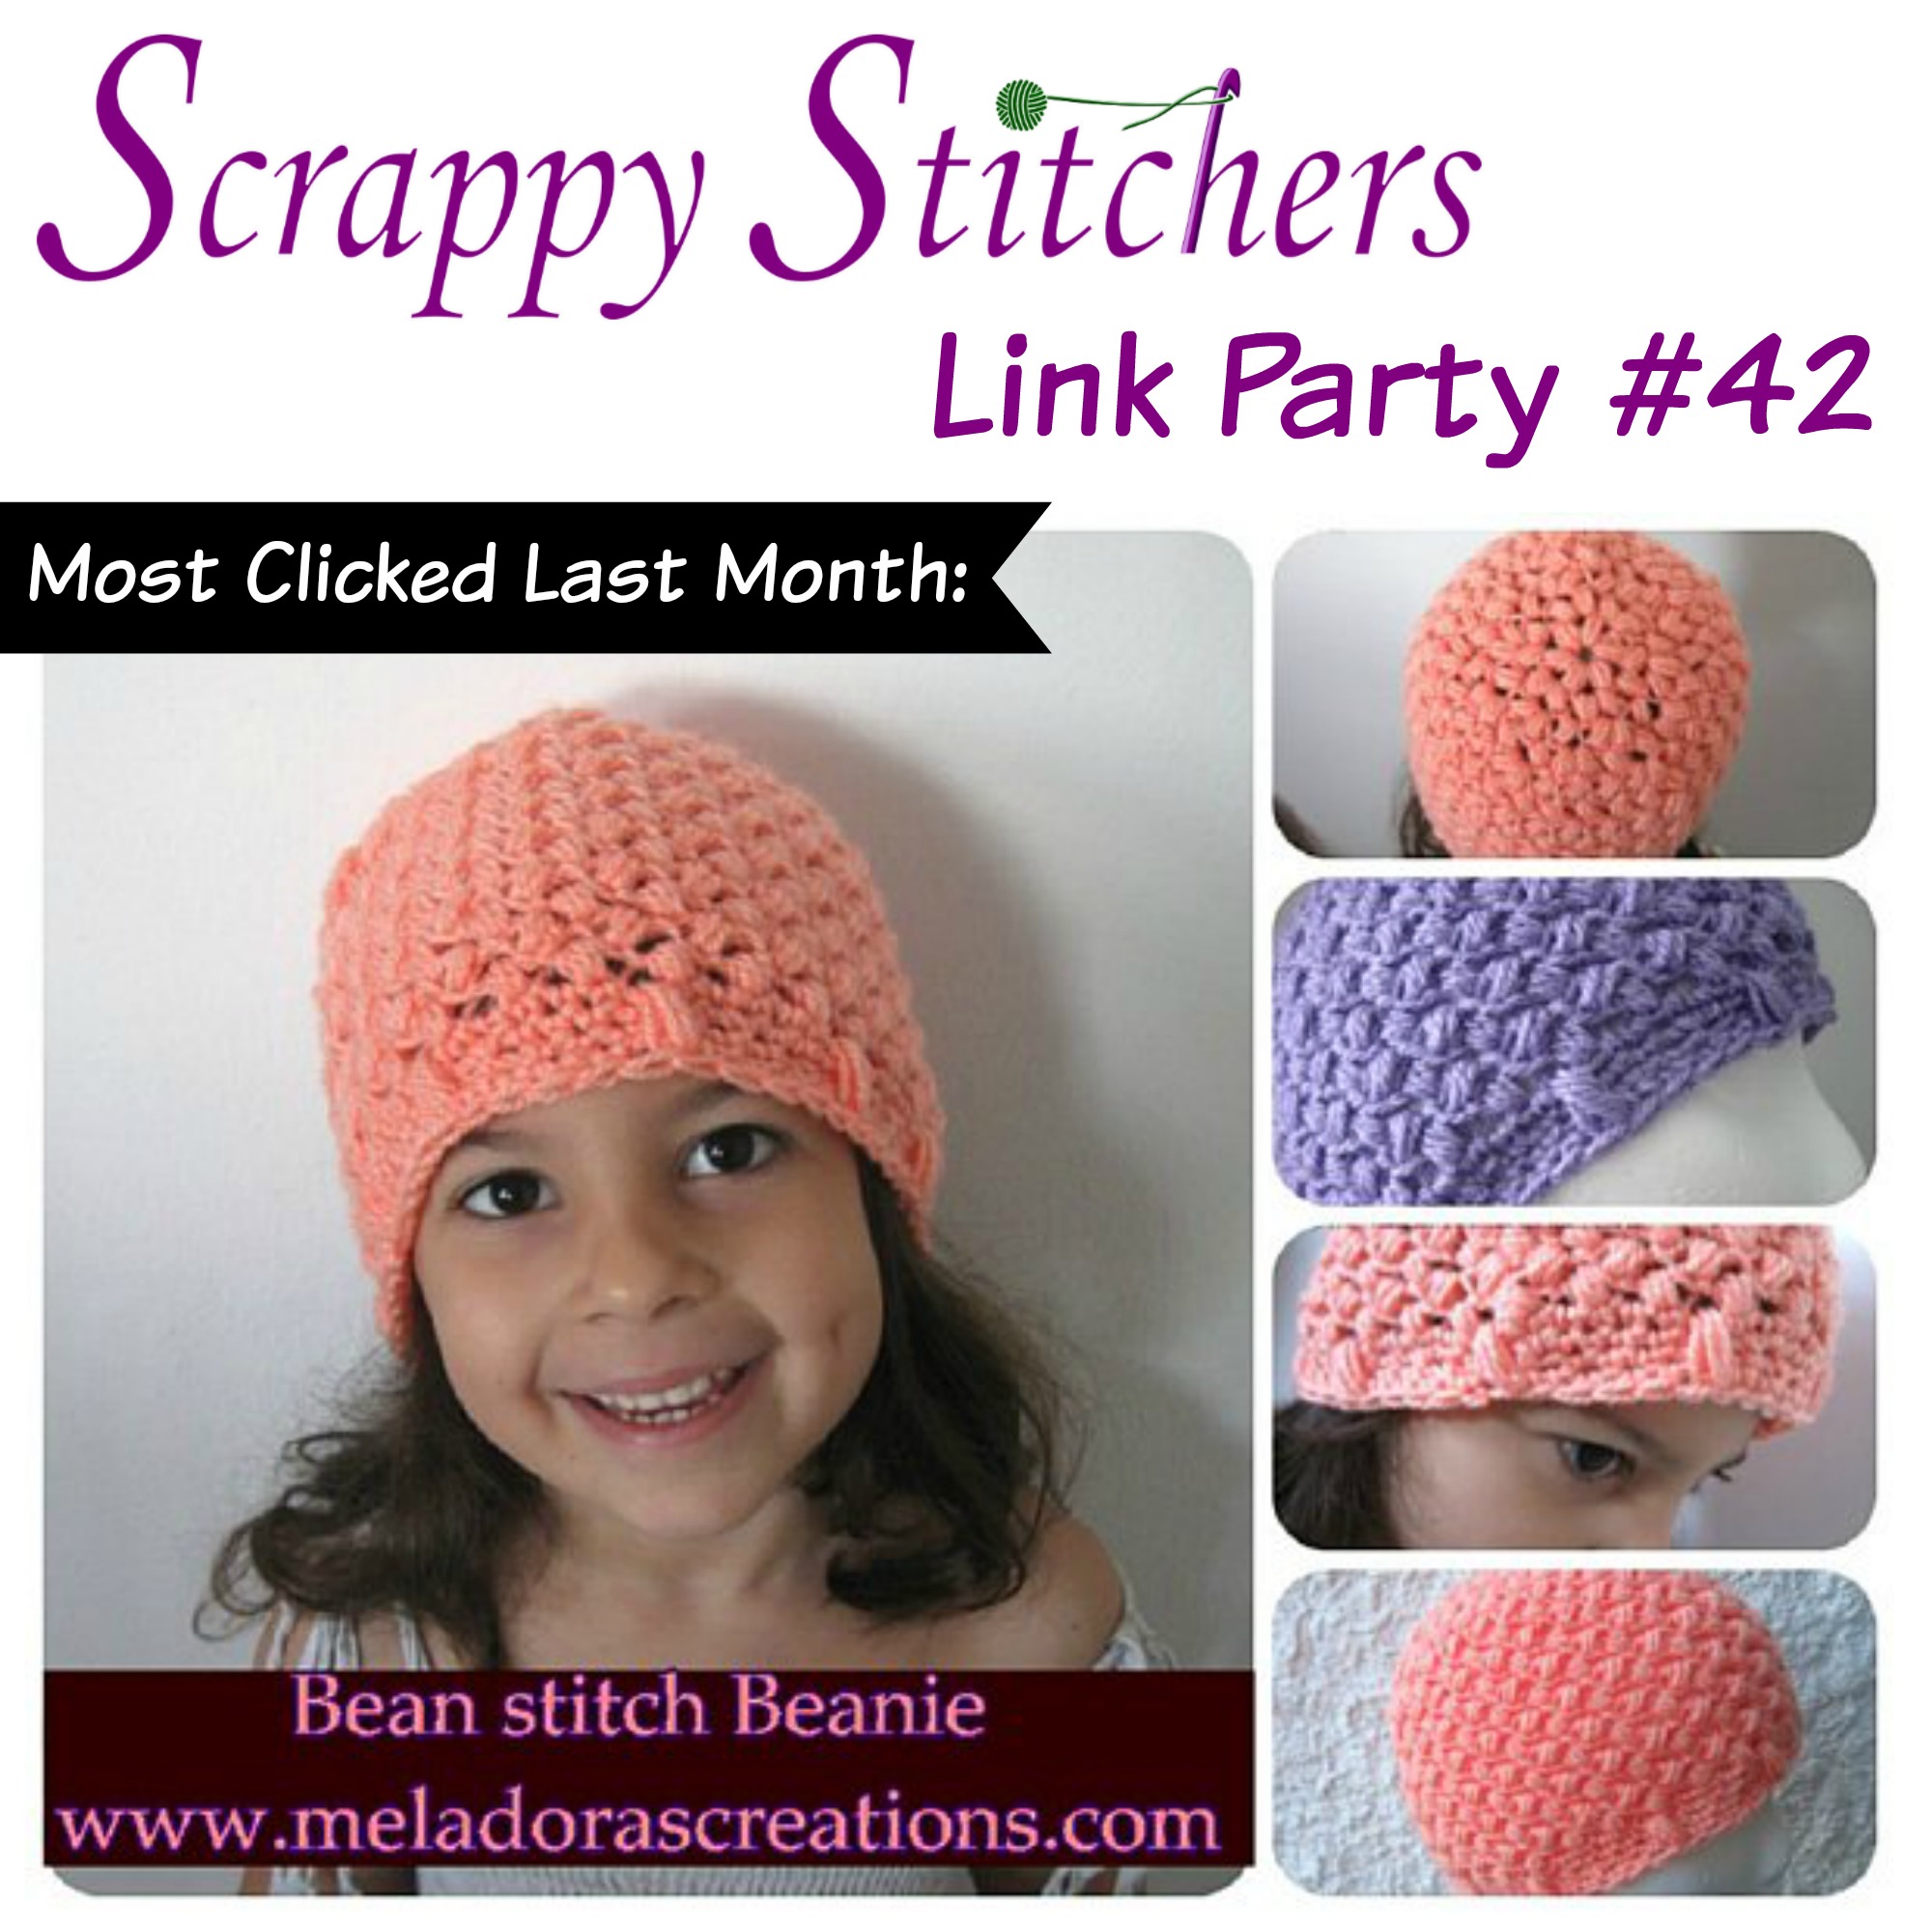 Most clicked in Scrappy Stitchers 41 - Bean Stitch Beanie by Meladora's Creations